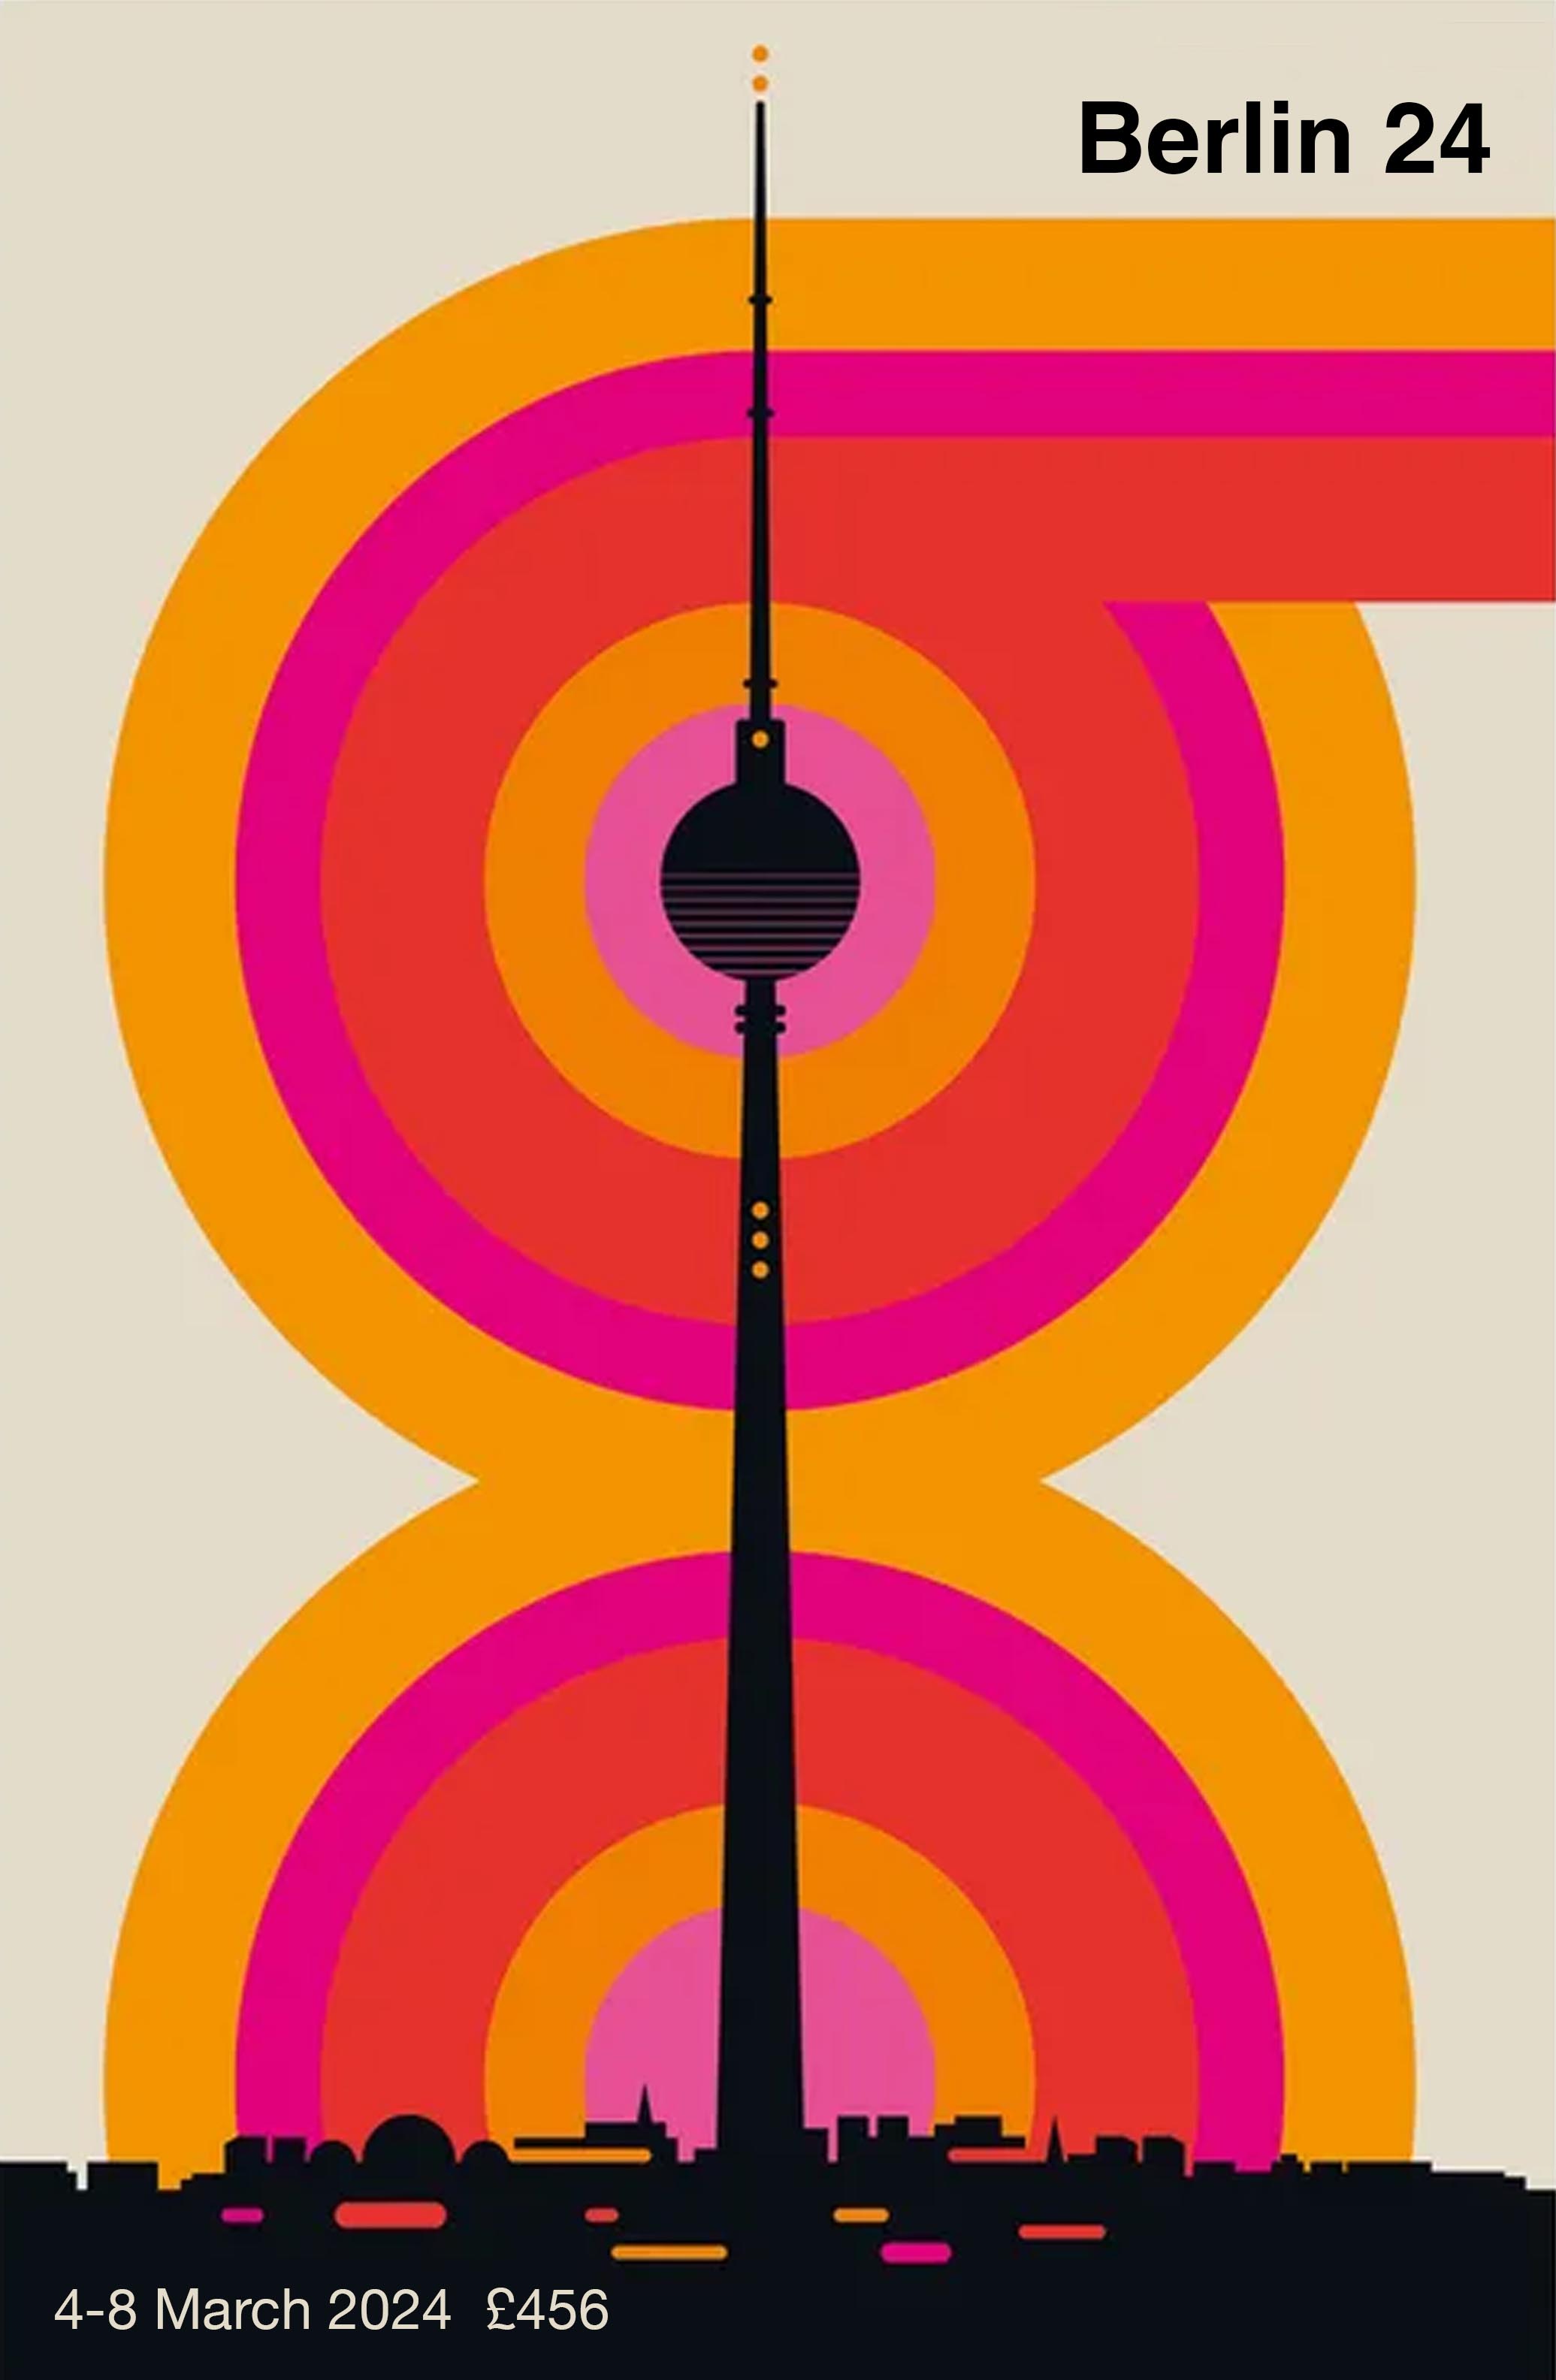 BERLIN 2024 Graphic Design/ Illustration Students University of